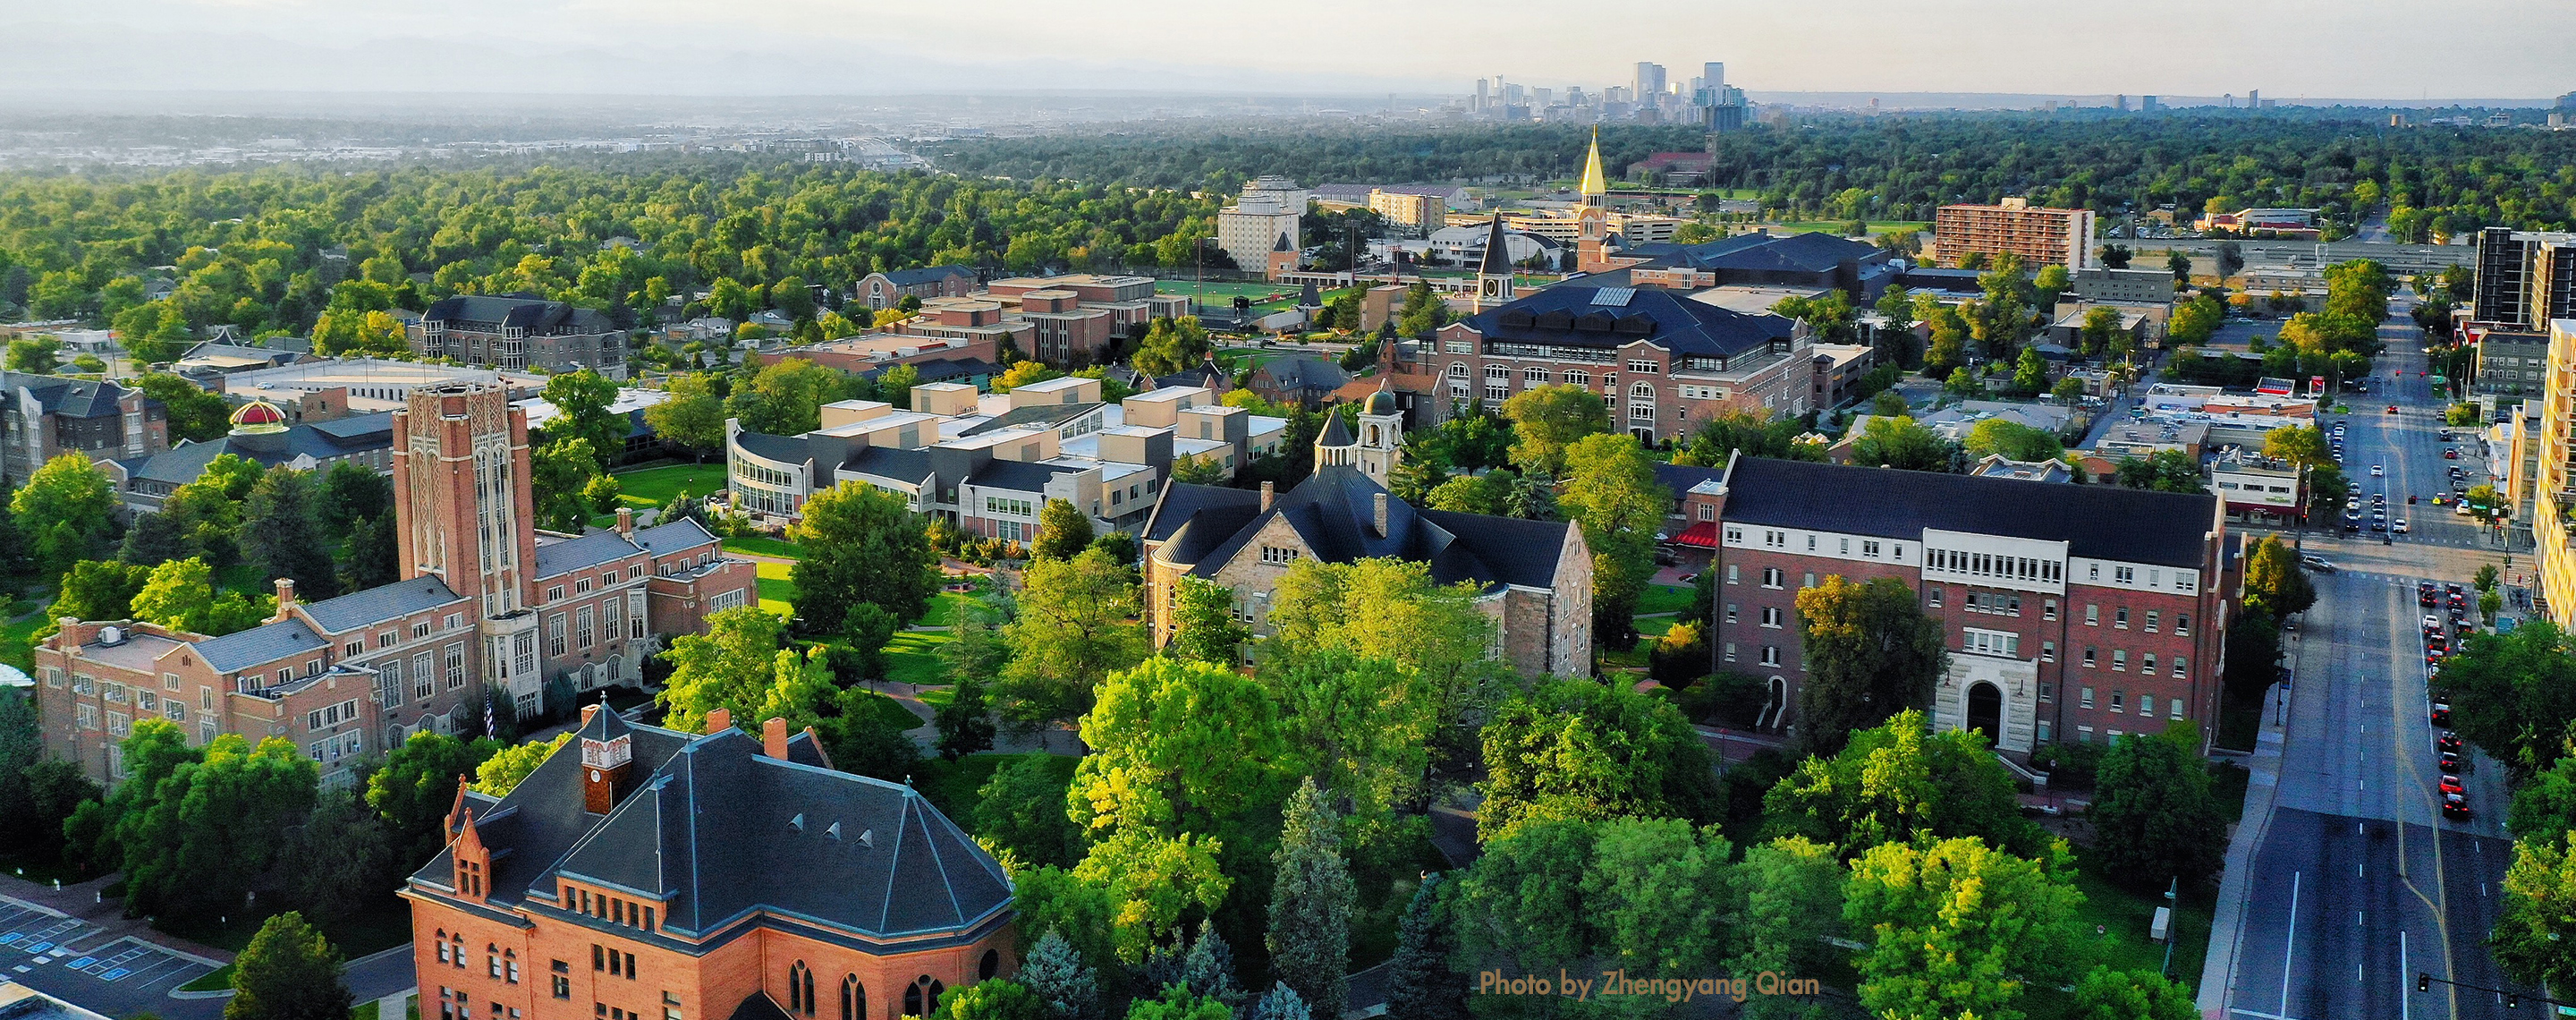 Aerial view of University of Denver campus